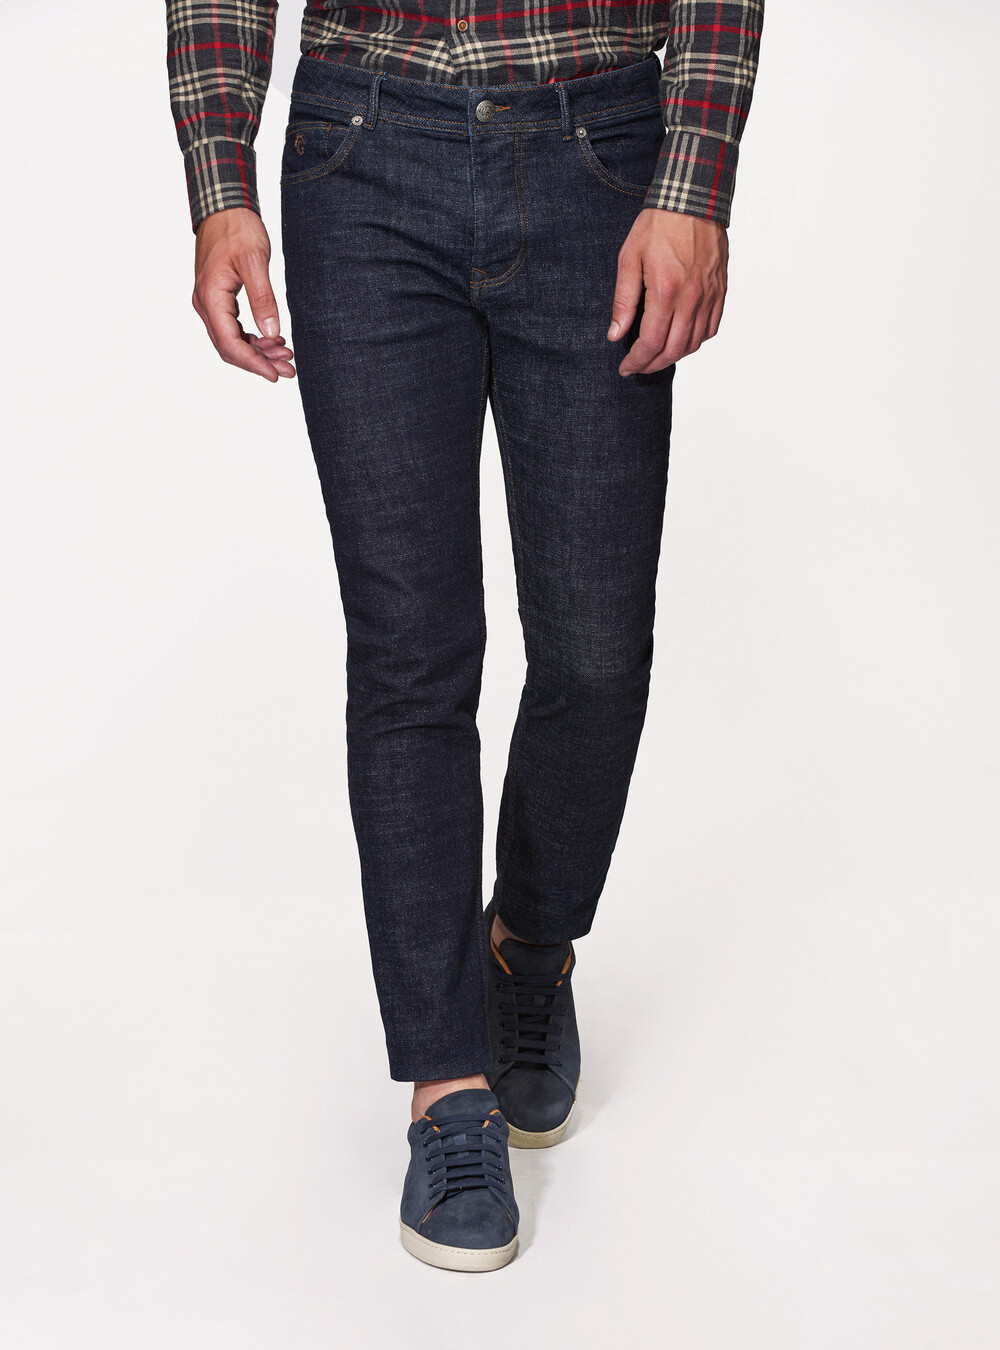 Jeans regular fit blue navy | GutteridgeUS | Jeans Uomo